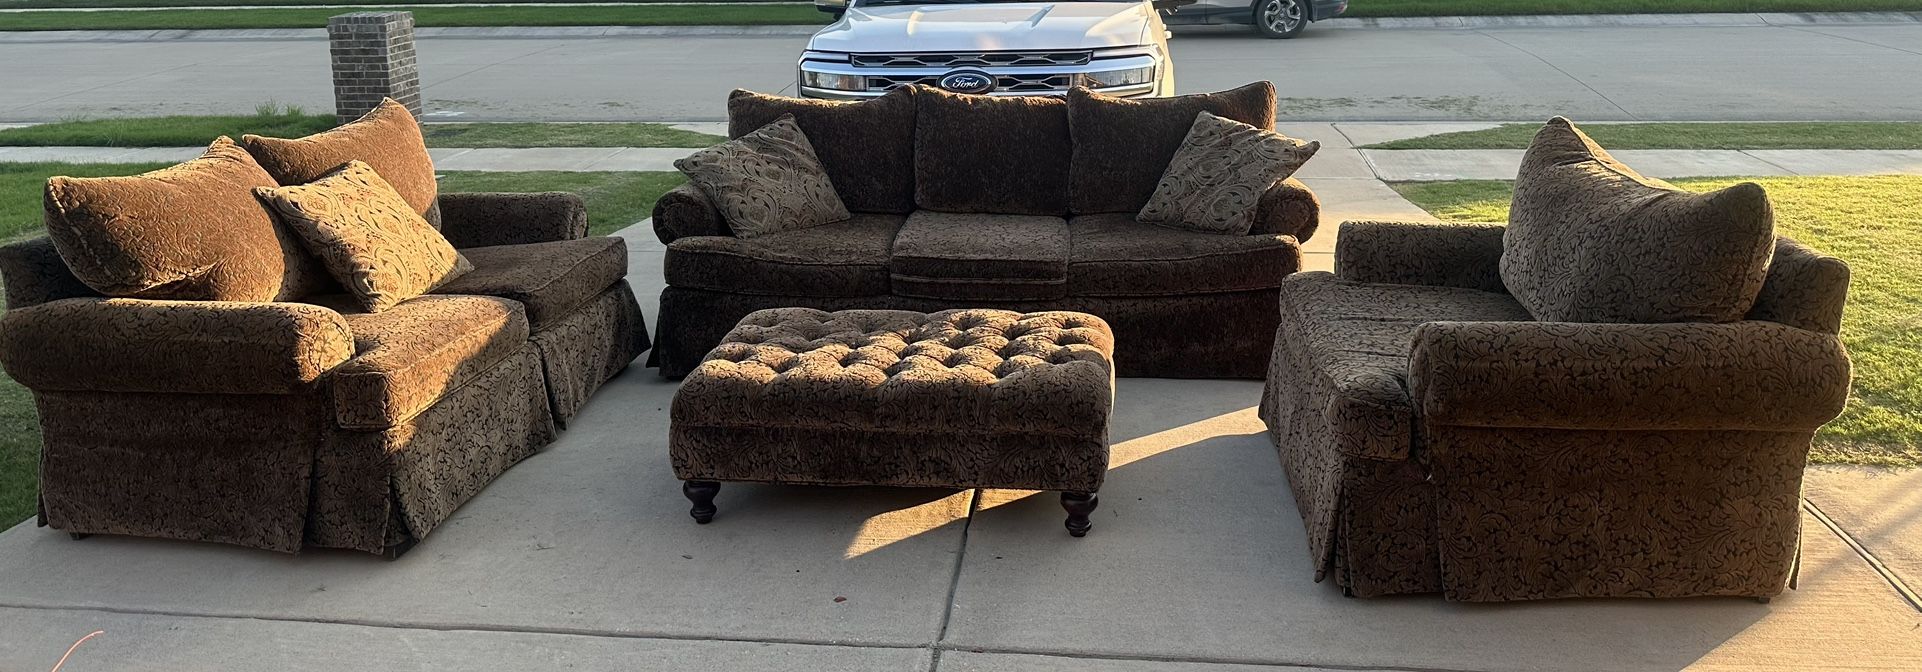 Livingroom Set : Sofa, Loveseat, Chair And Ottoman 